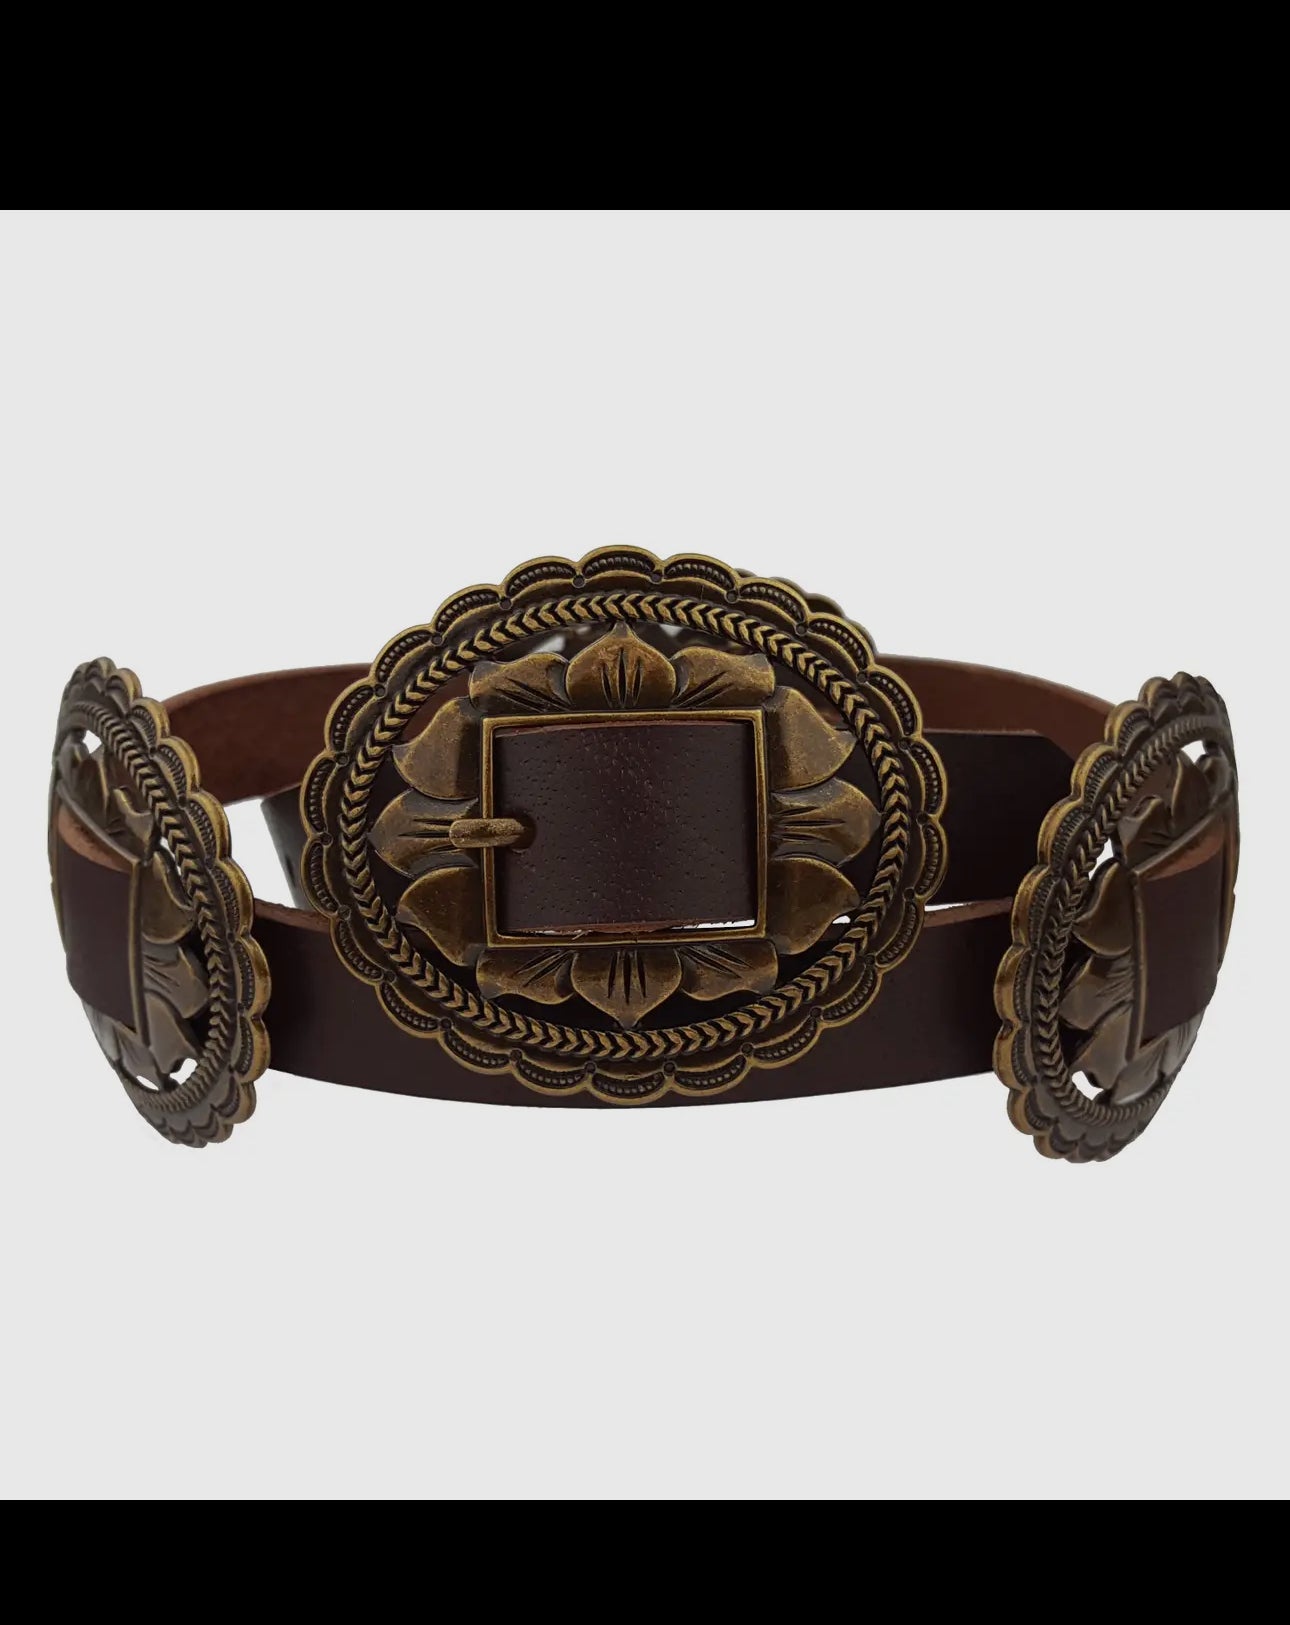 Brown genuine leather belt